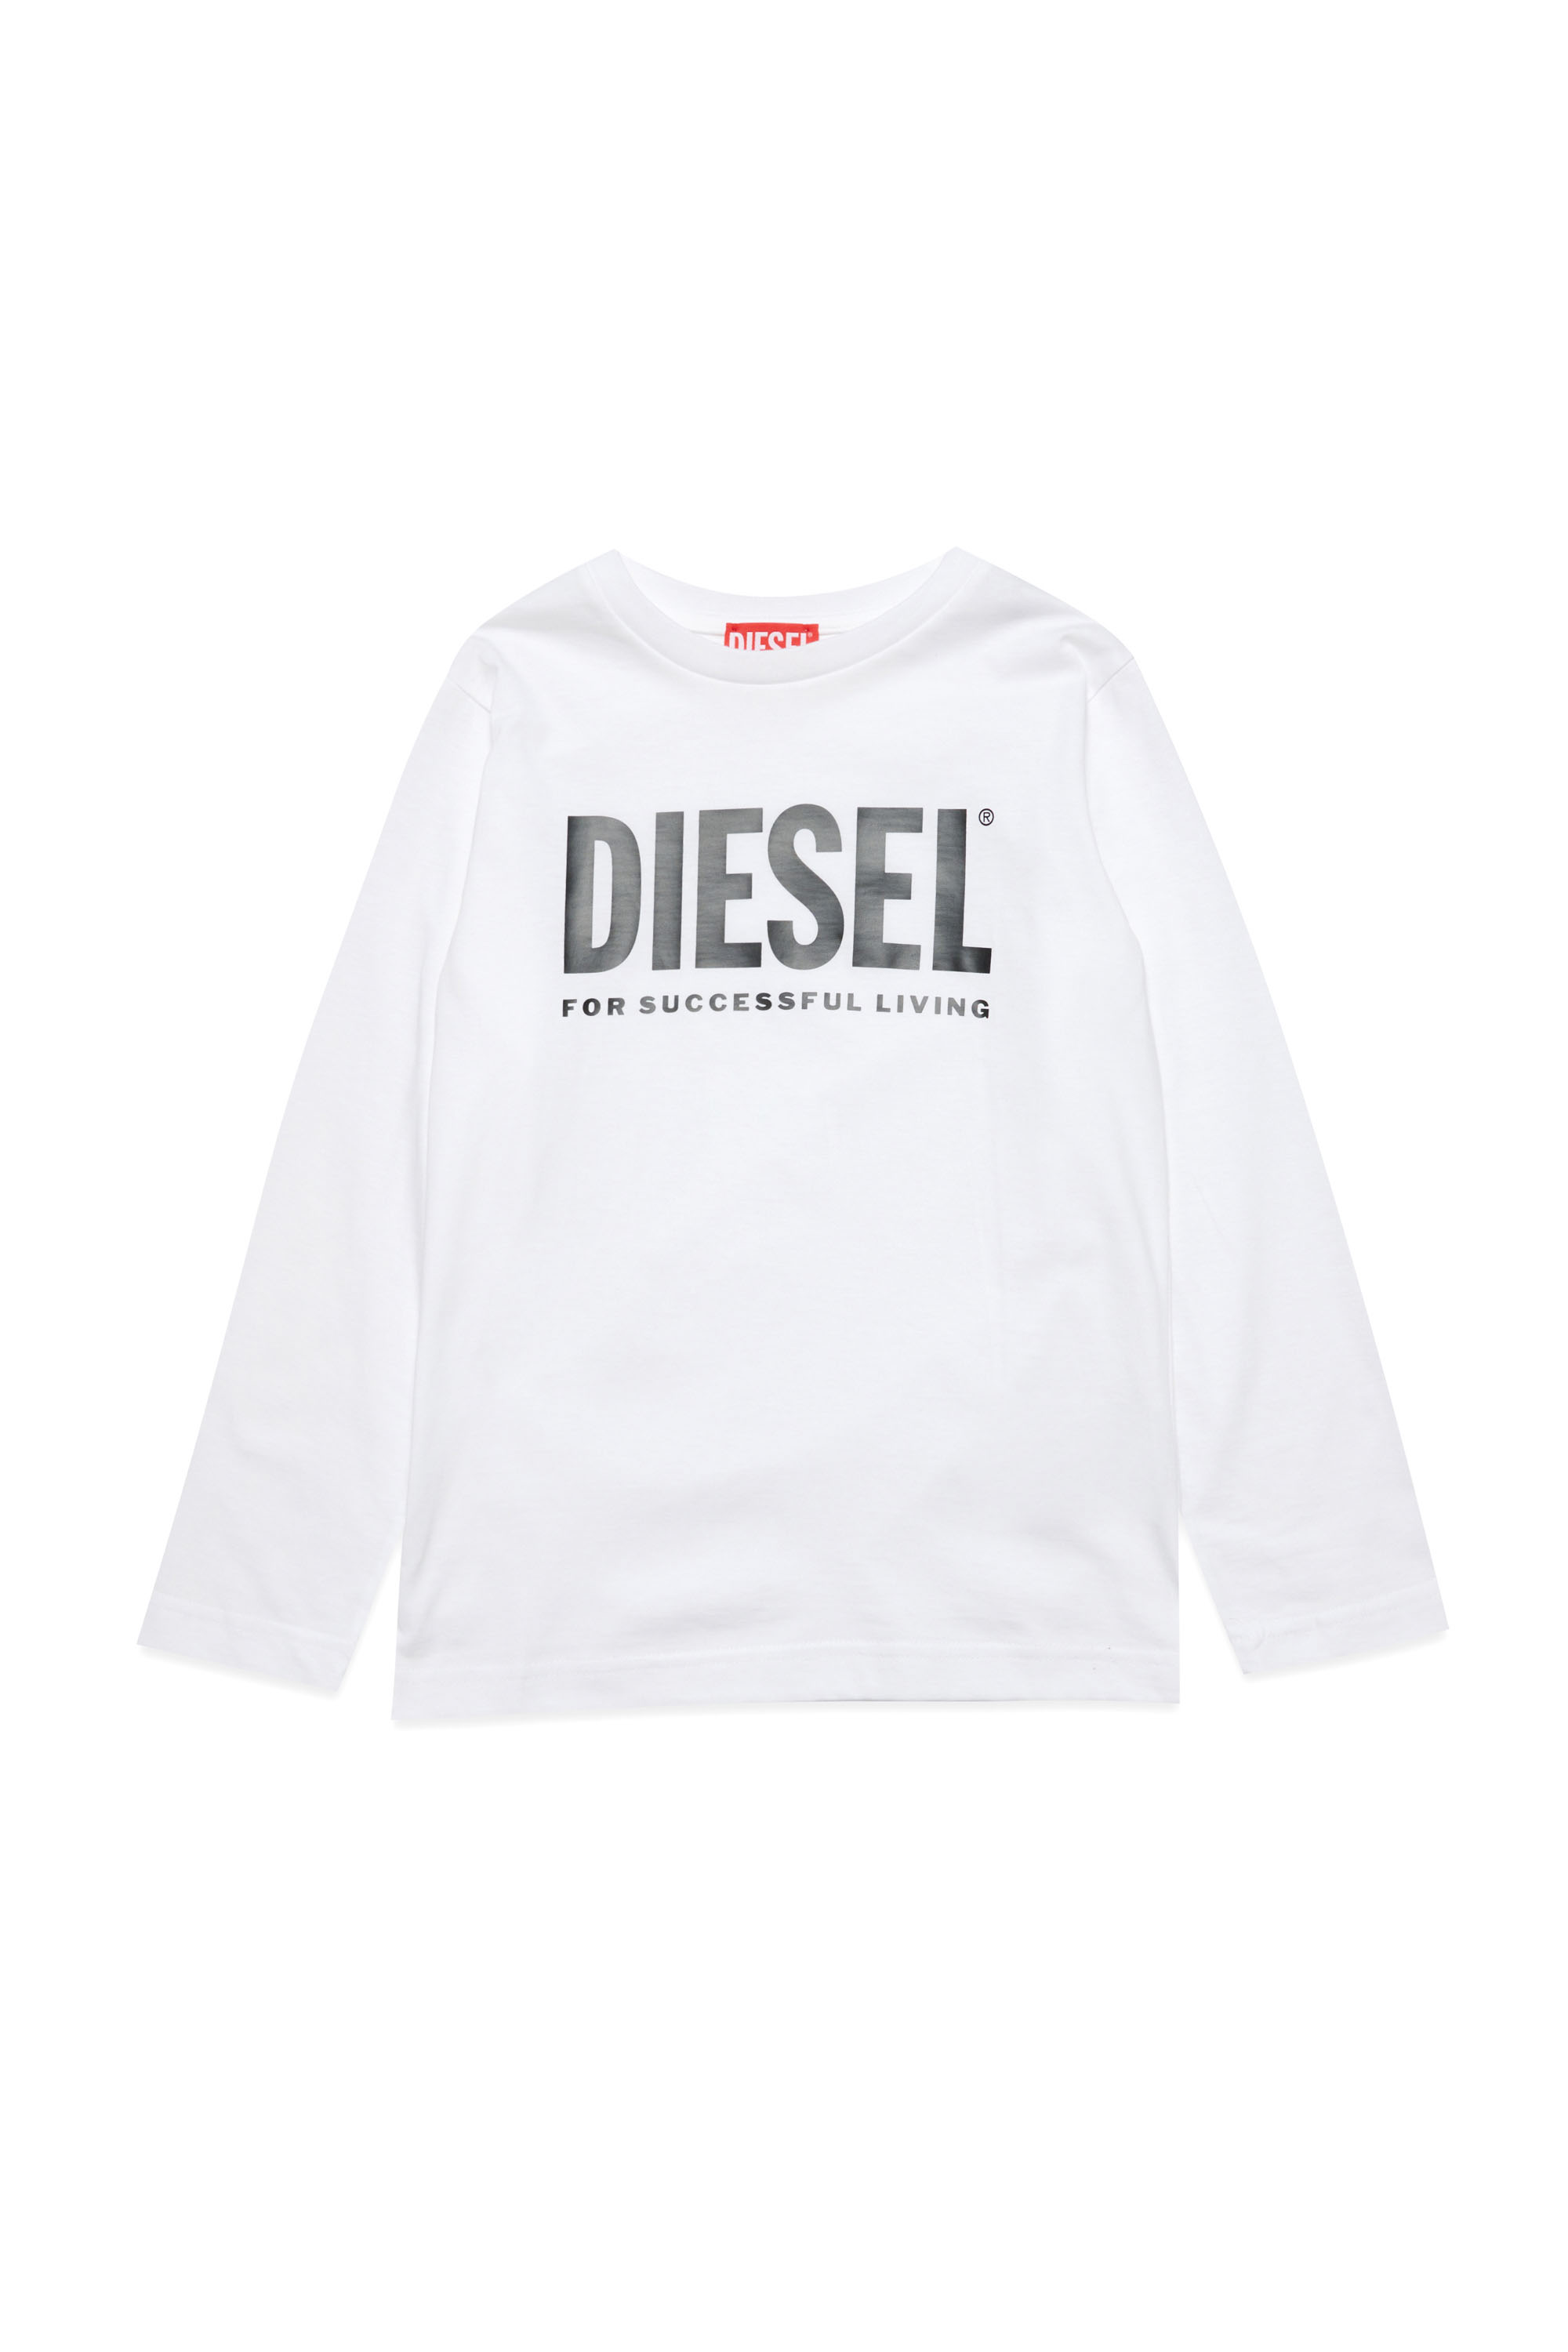 Diesel - LTGIM DI ML, Bianco - Image 1